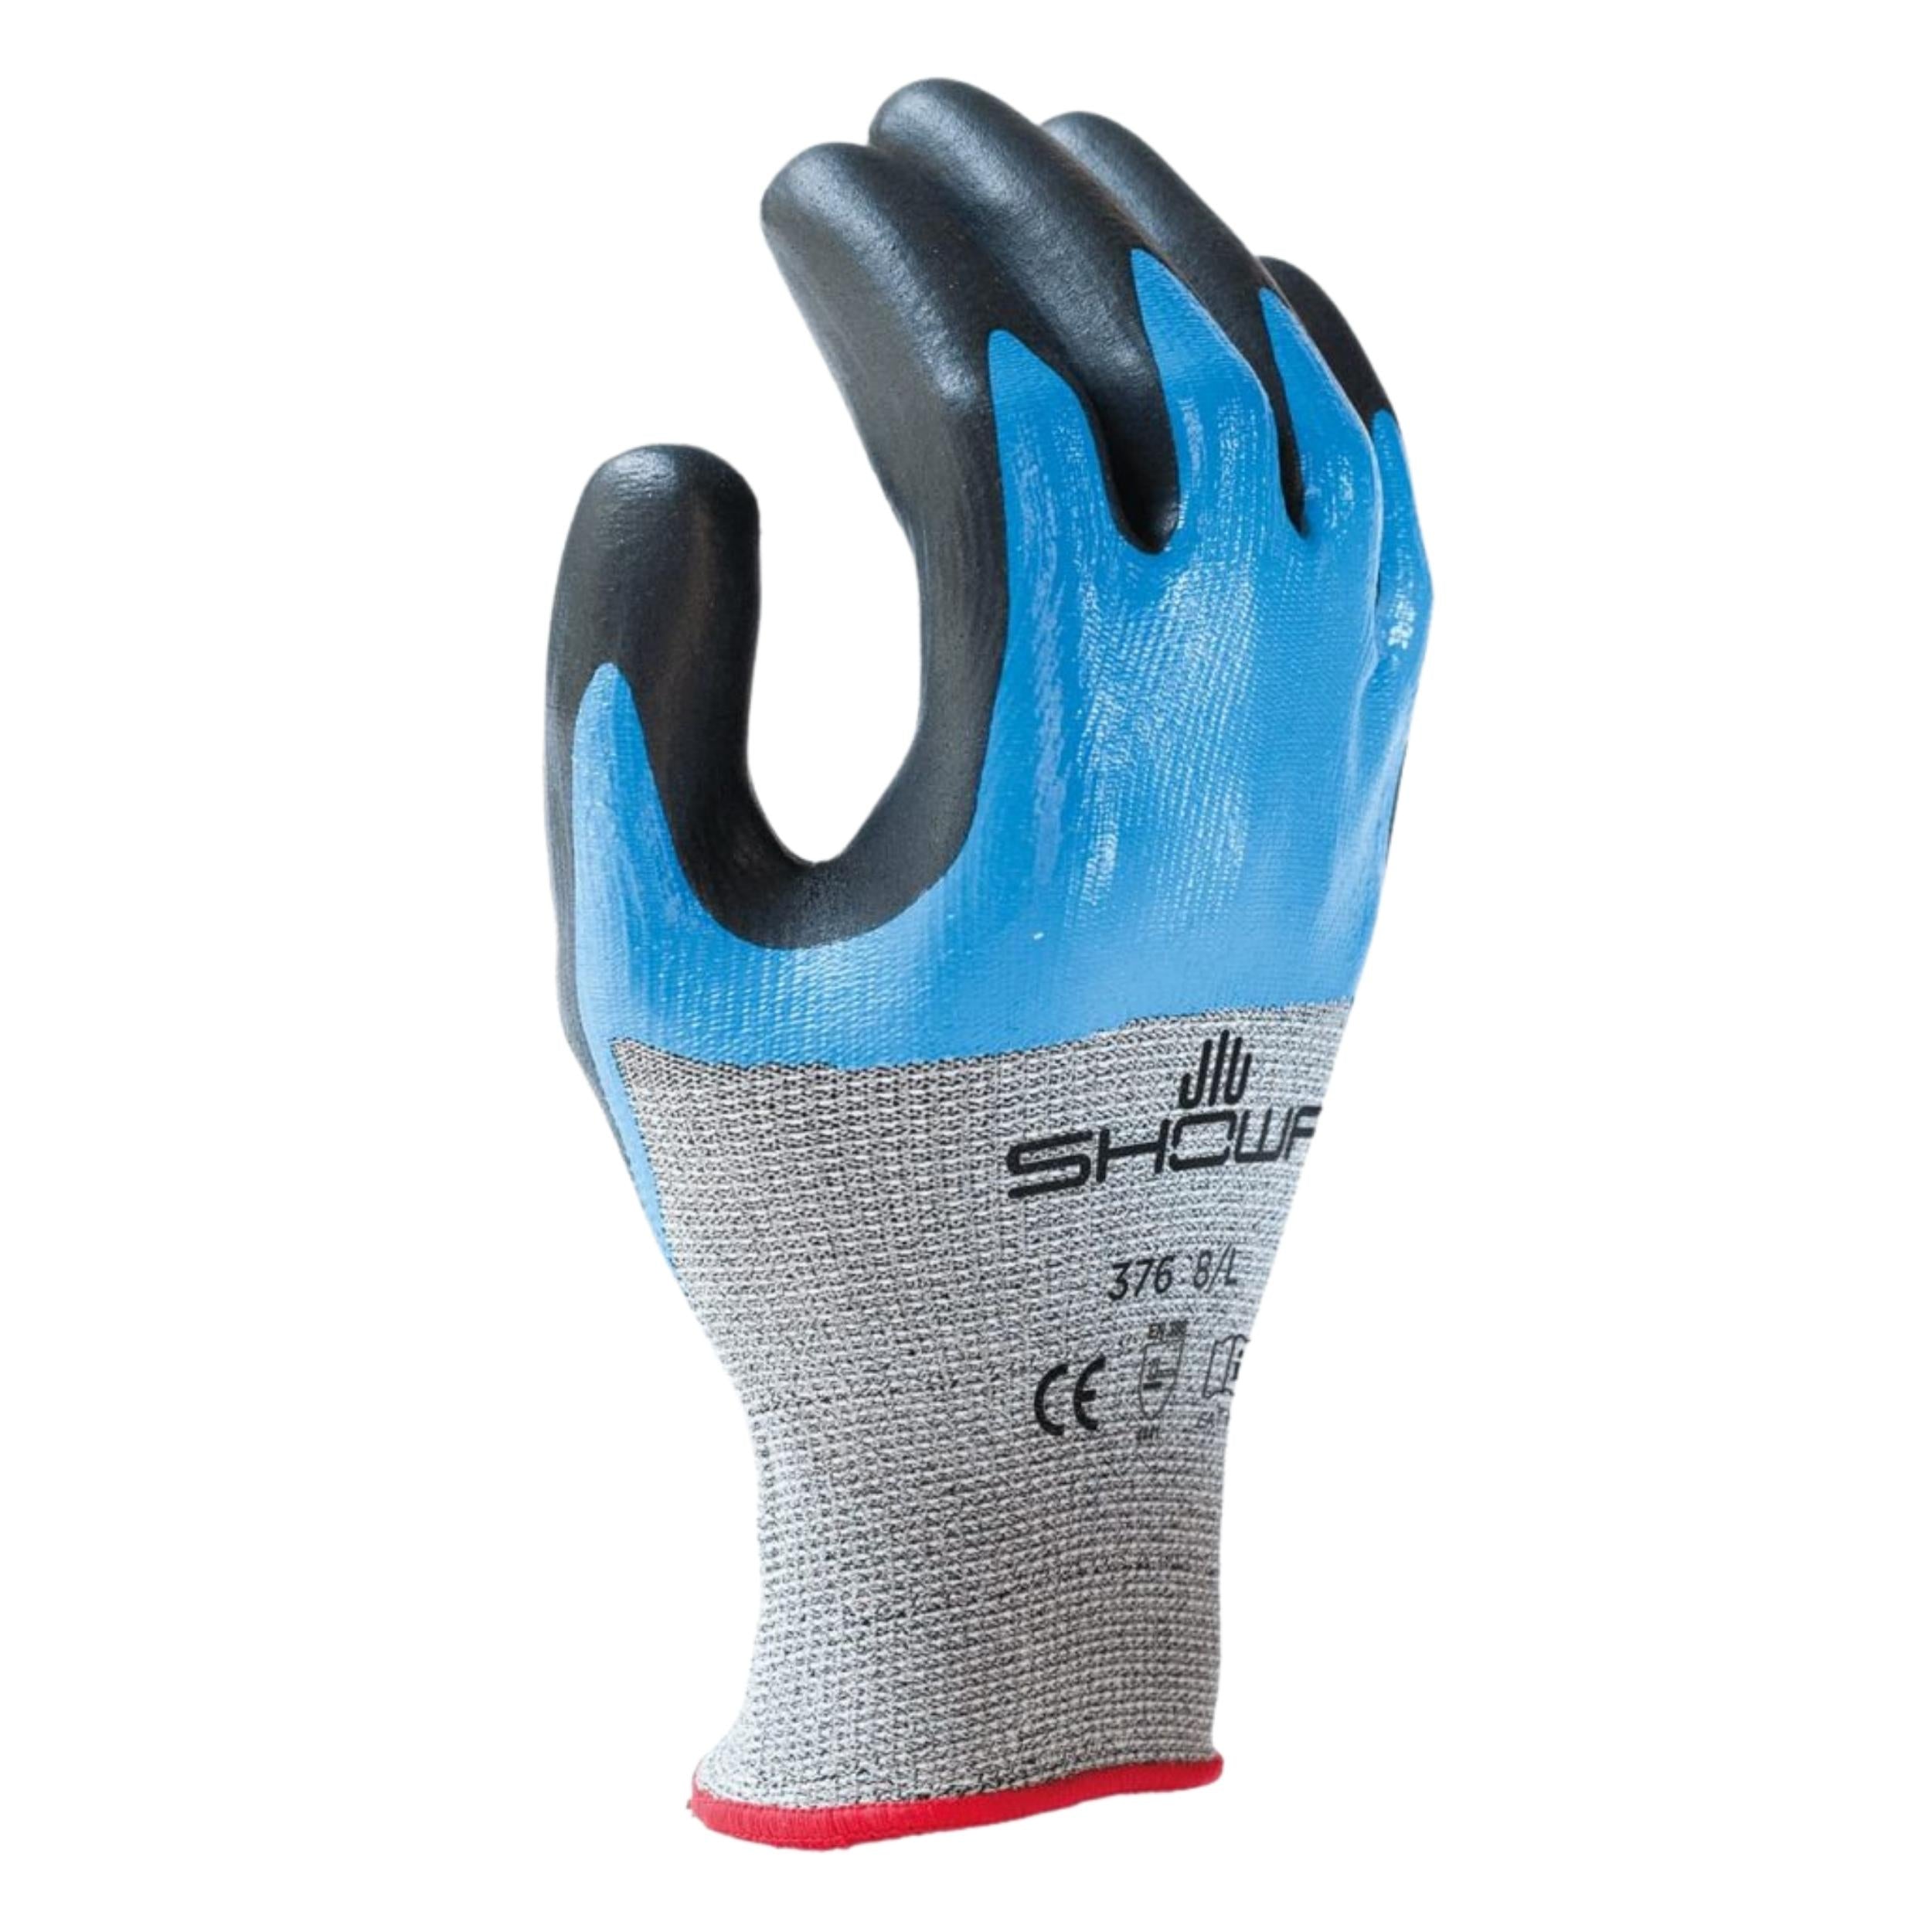 SHOWA 376 Liquid- resistant: General-purpose Gloves